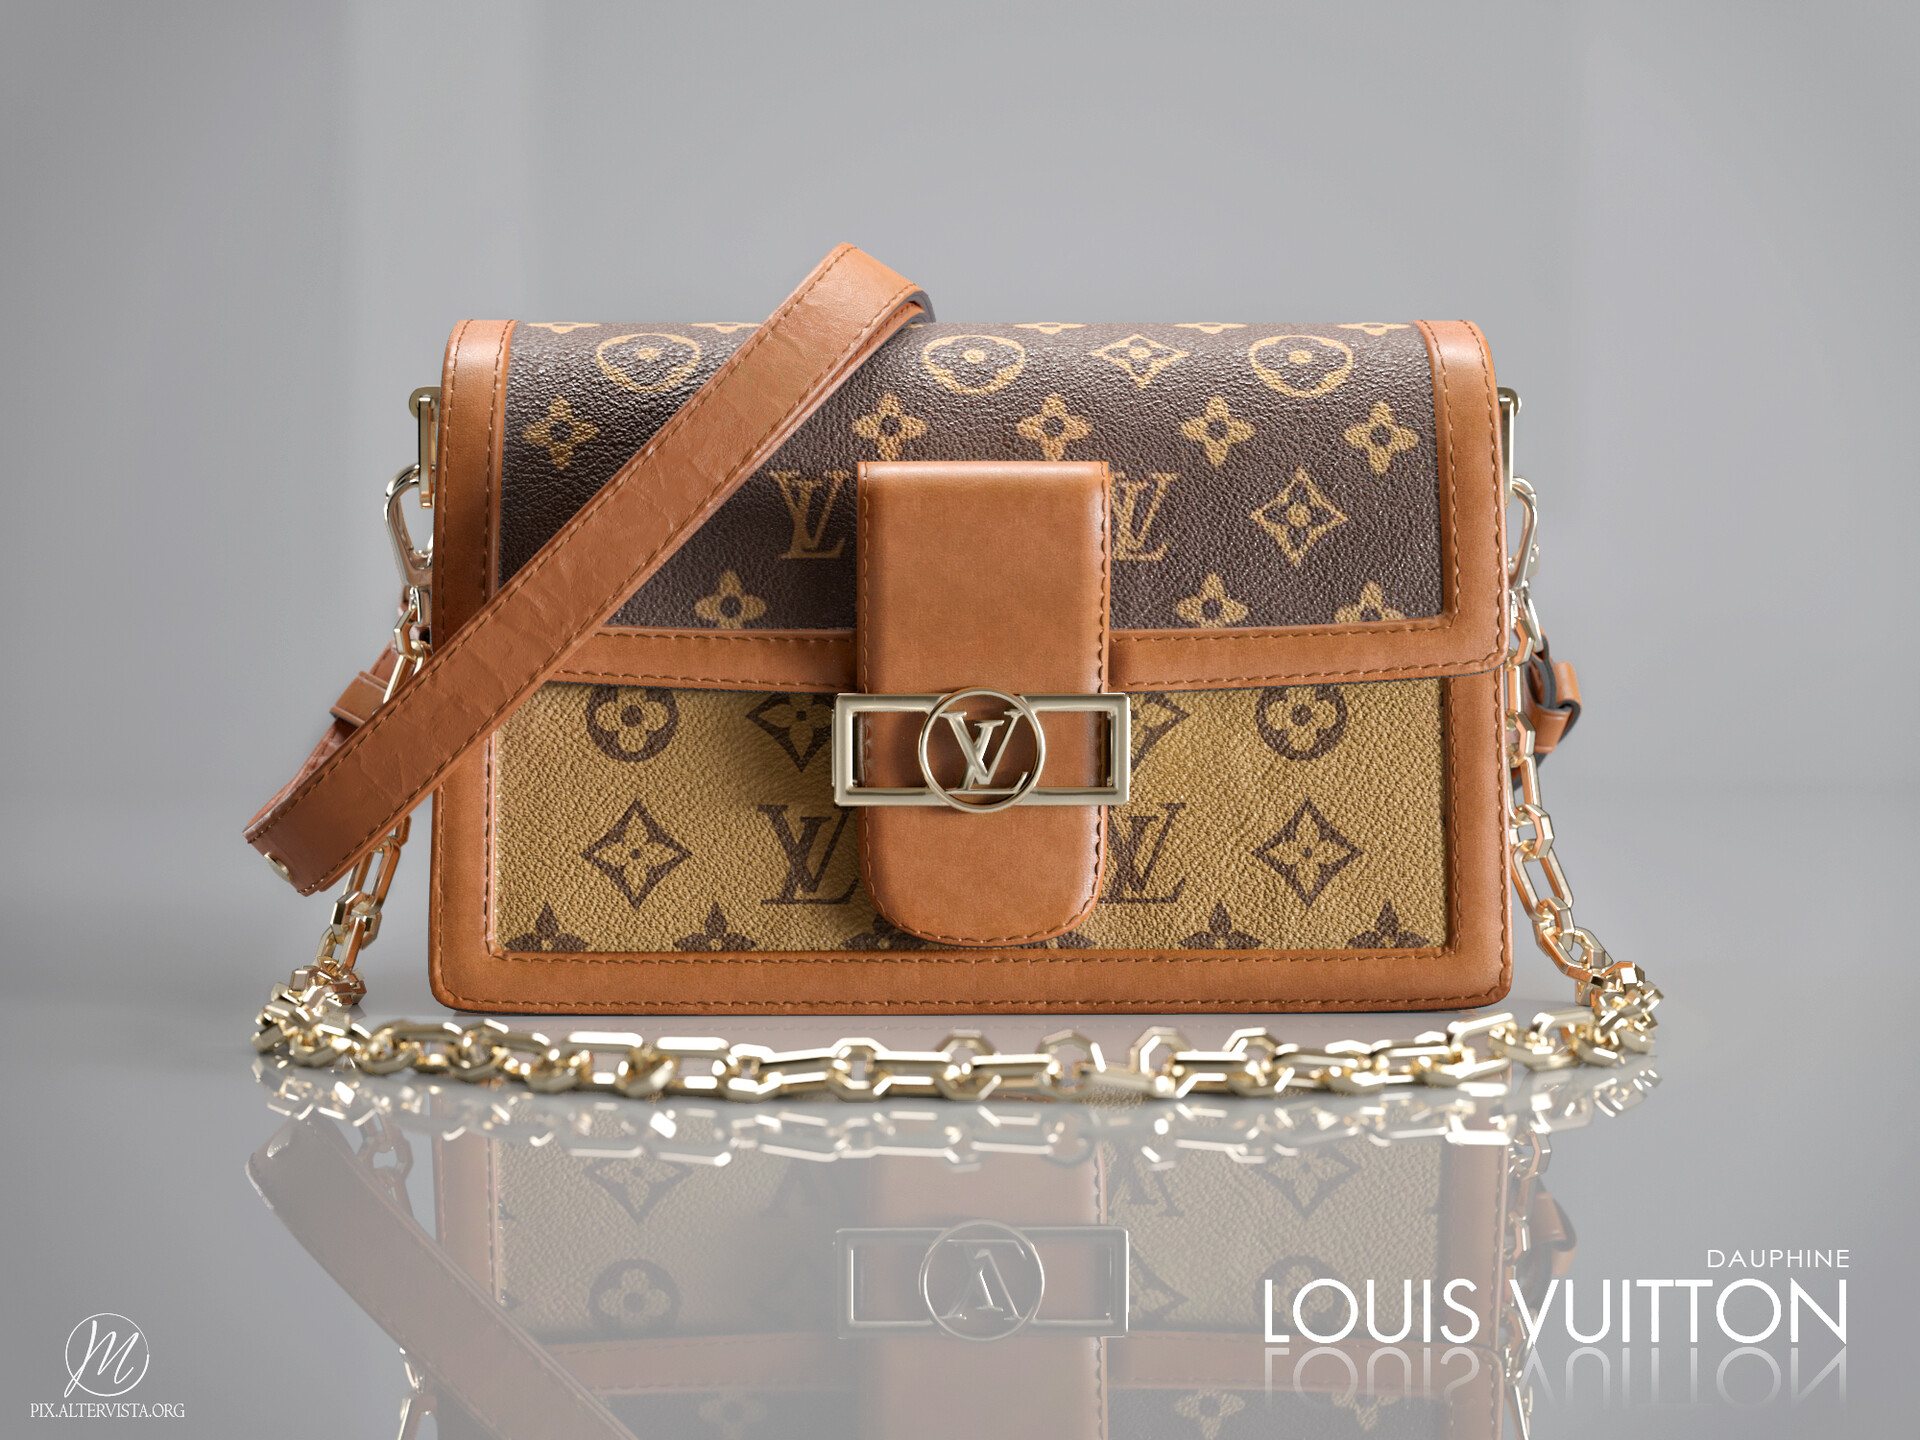 Louis Vuitton Dauphine Bag Archives - Duty Free Hunter